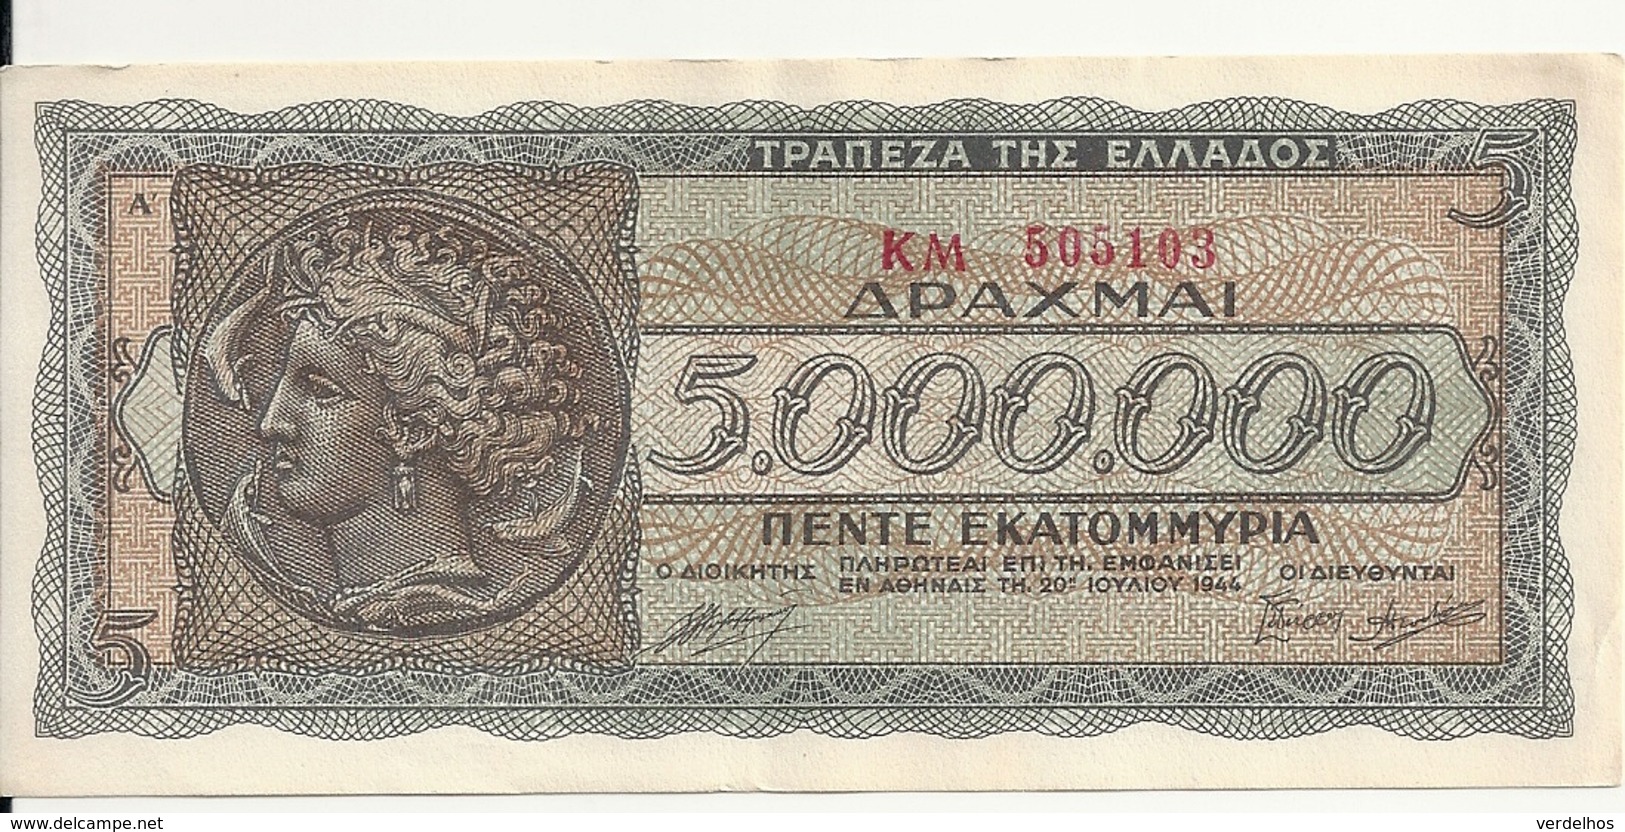 GRECE 5 MILLION DRACHMAI 1944 XF+ P 128 - Grèce